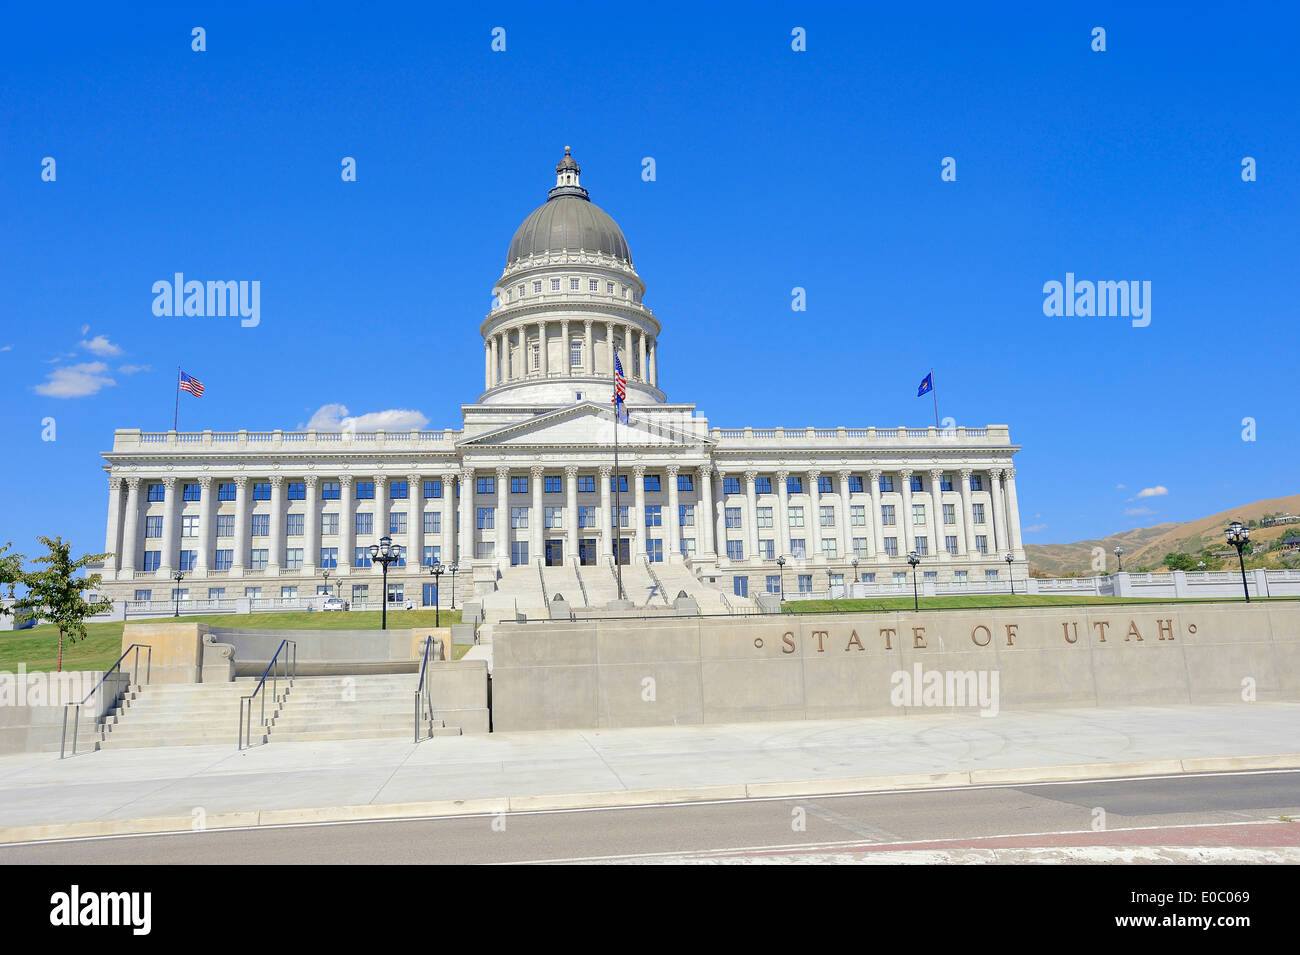 L'Utah State Capitol Building, Capitol Hill, Salt Lake City, Utah, USA Banque D'Images